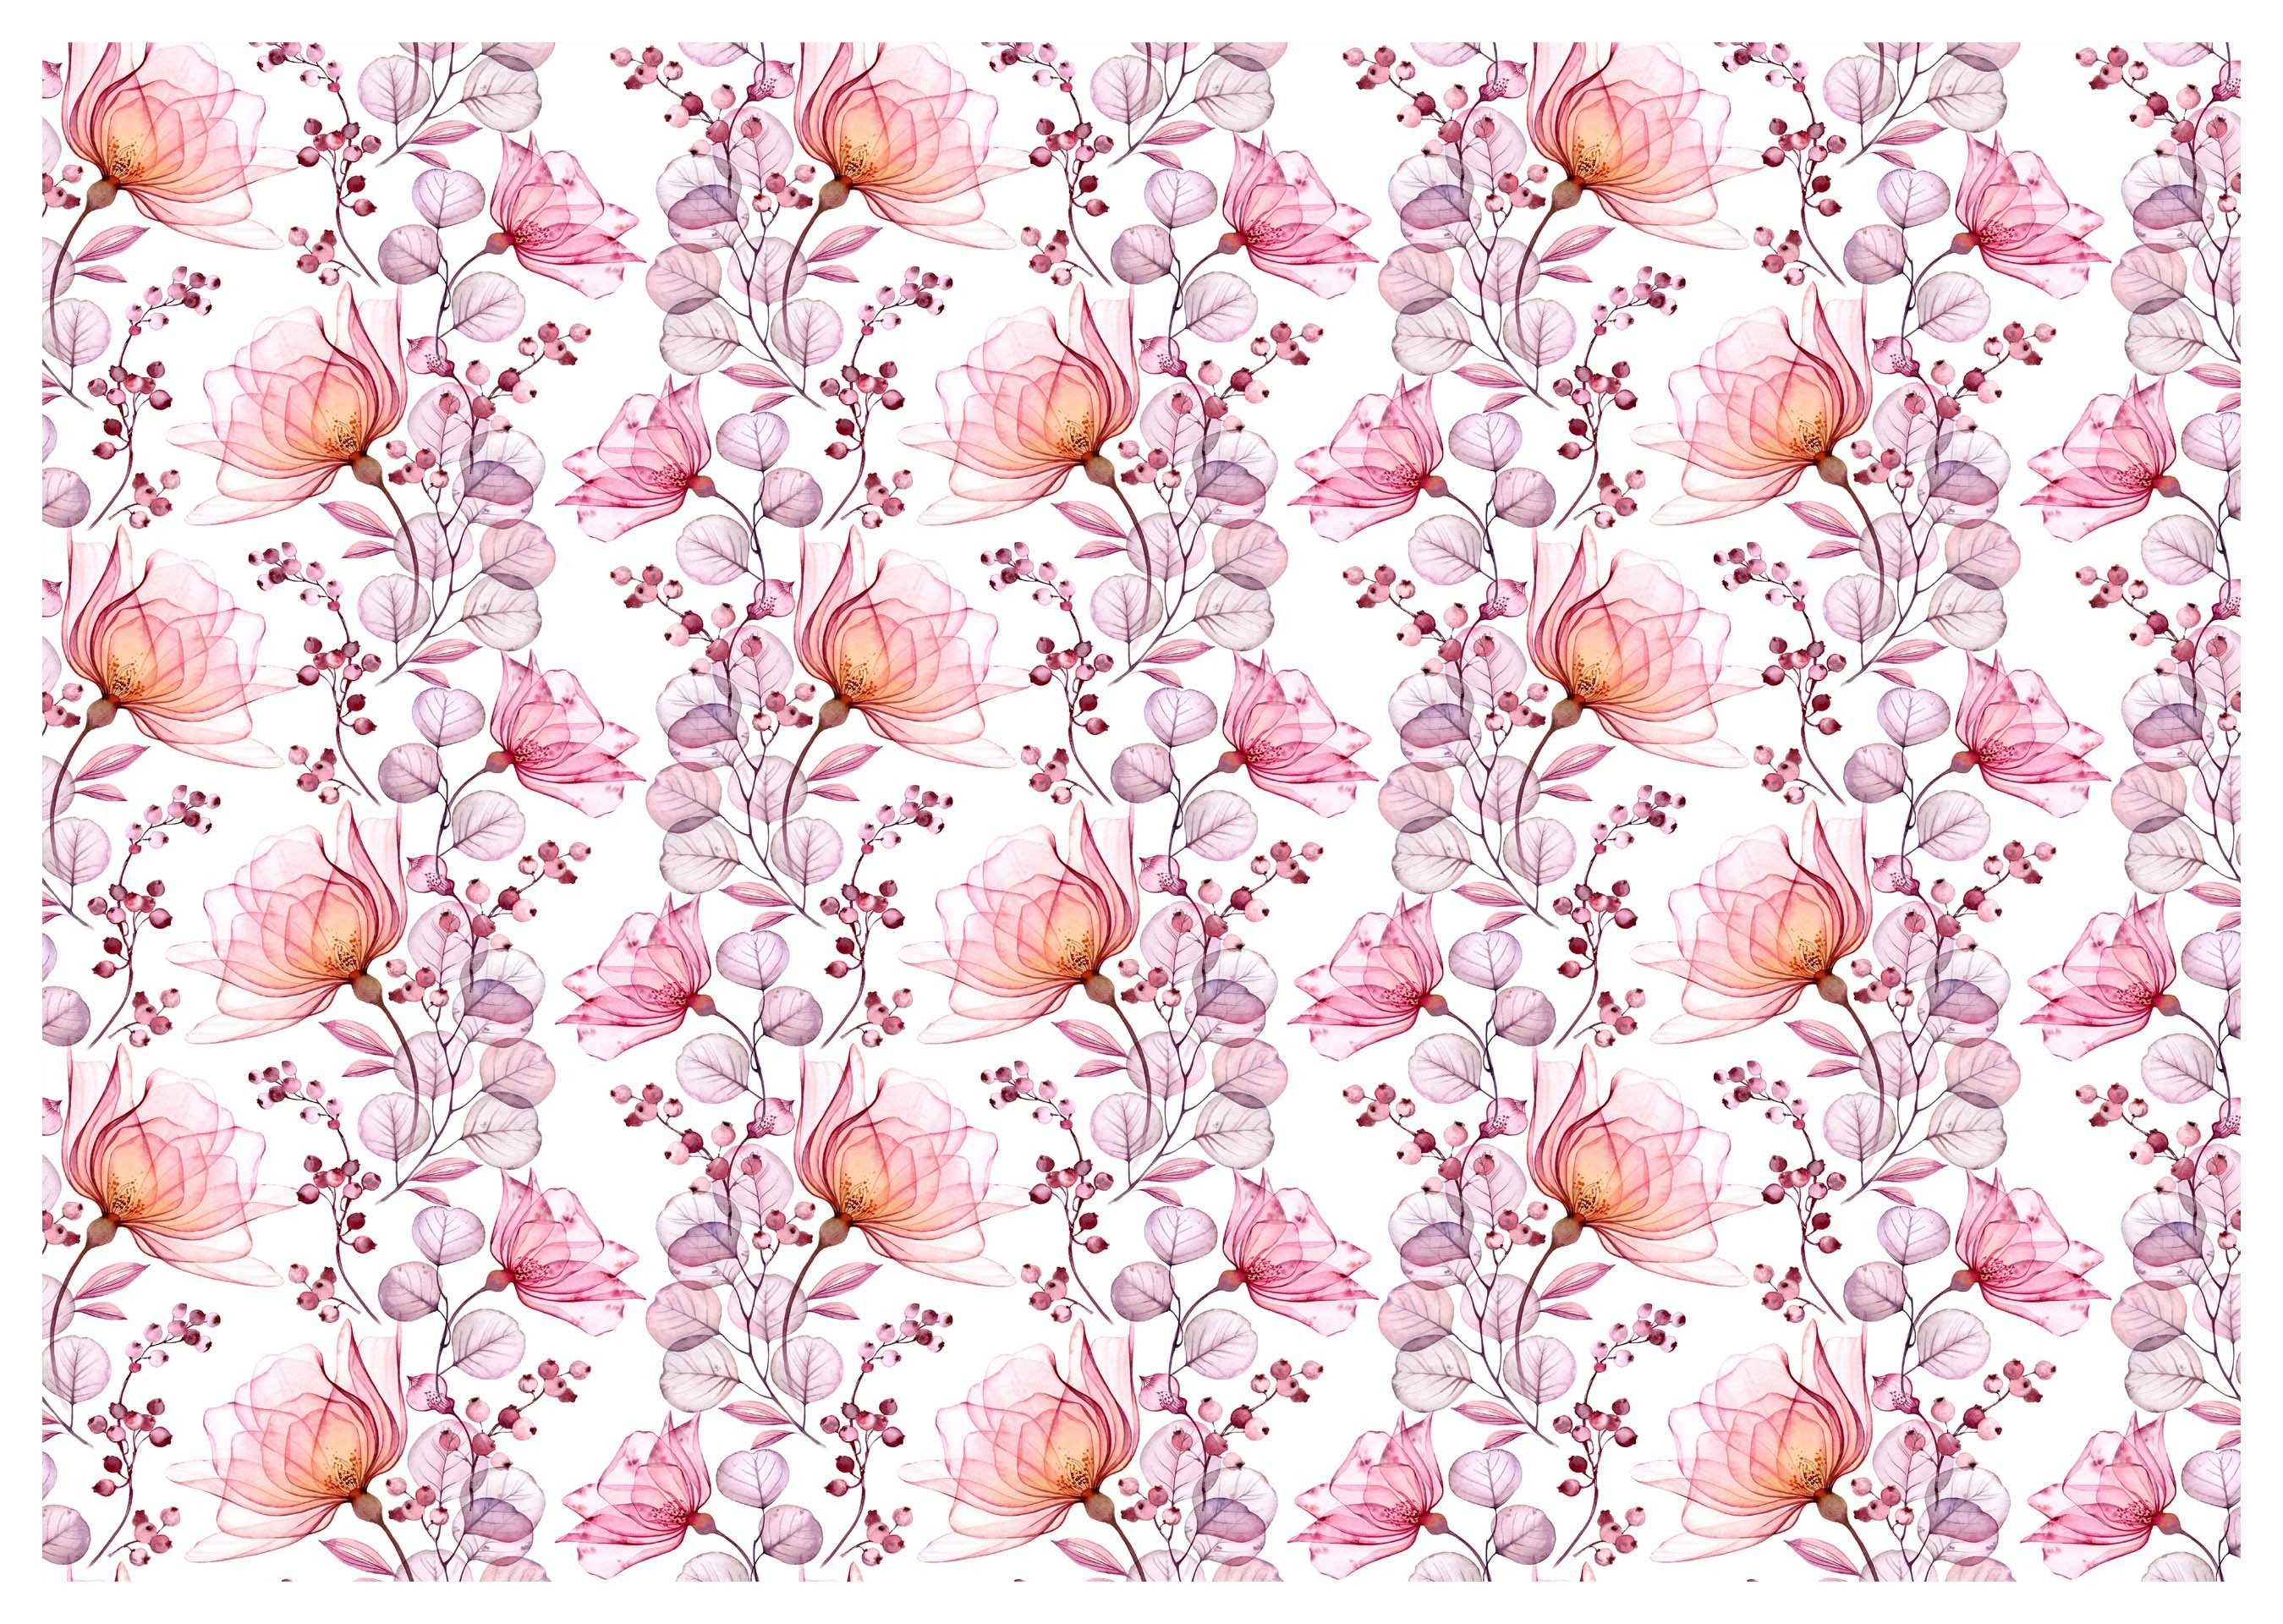 wandmotiv24 Fototapete Blüten Natur, Wandtapete, glatt, Motivtapete, Malerei Blätter matt, Vliestapete